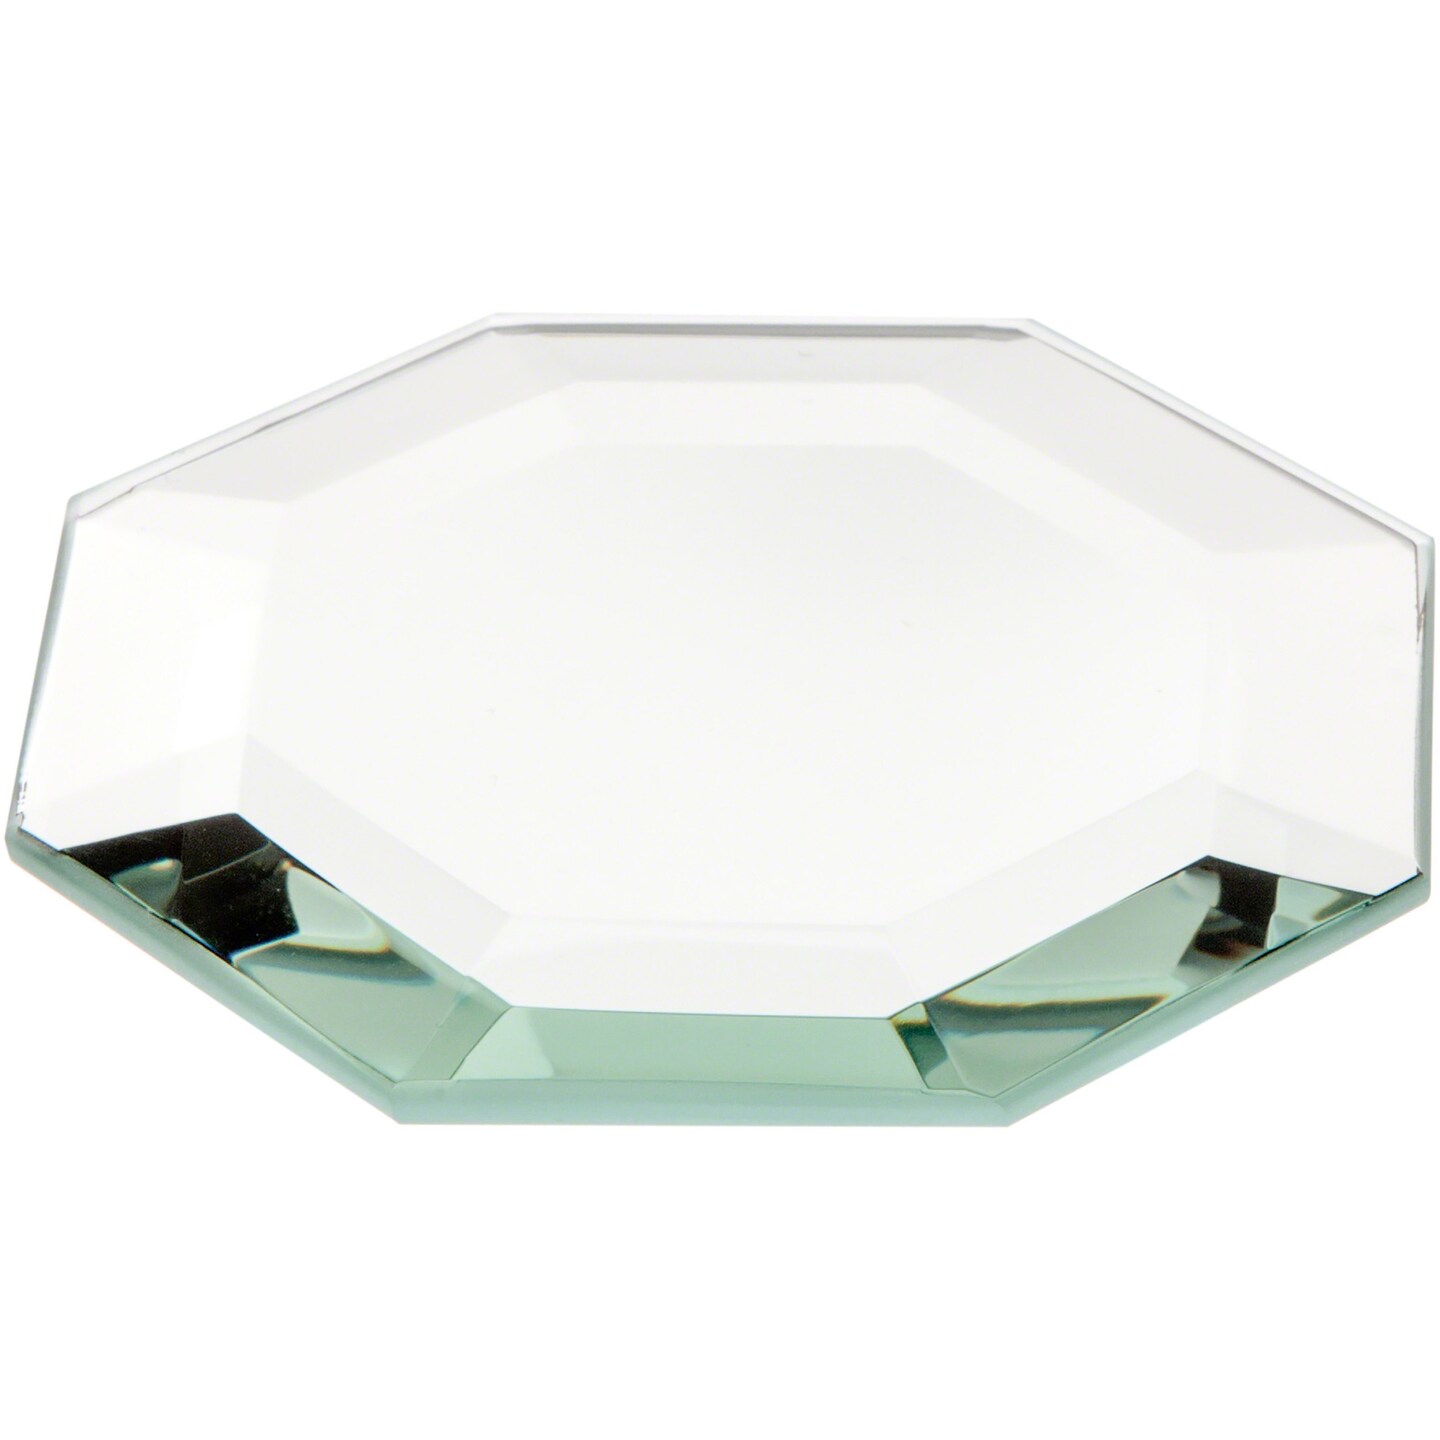 Plymor Octagon 5mm Beveled Glass Mirror, 3 inch x 3 inch